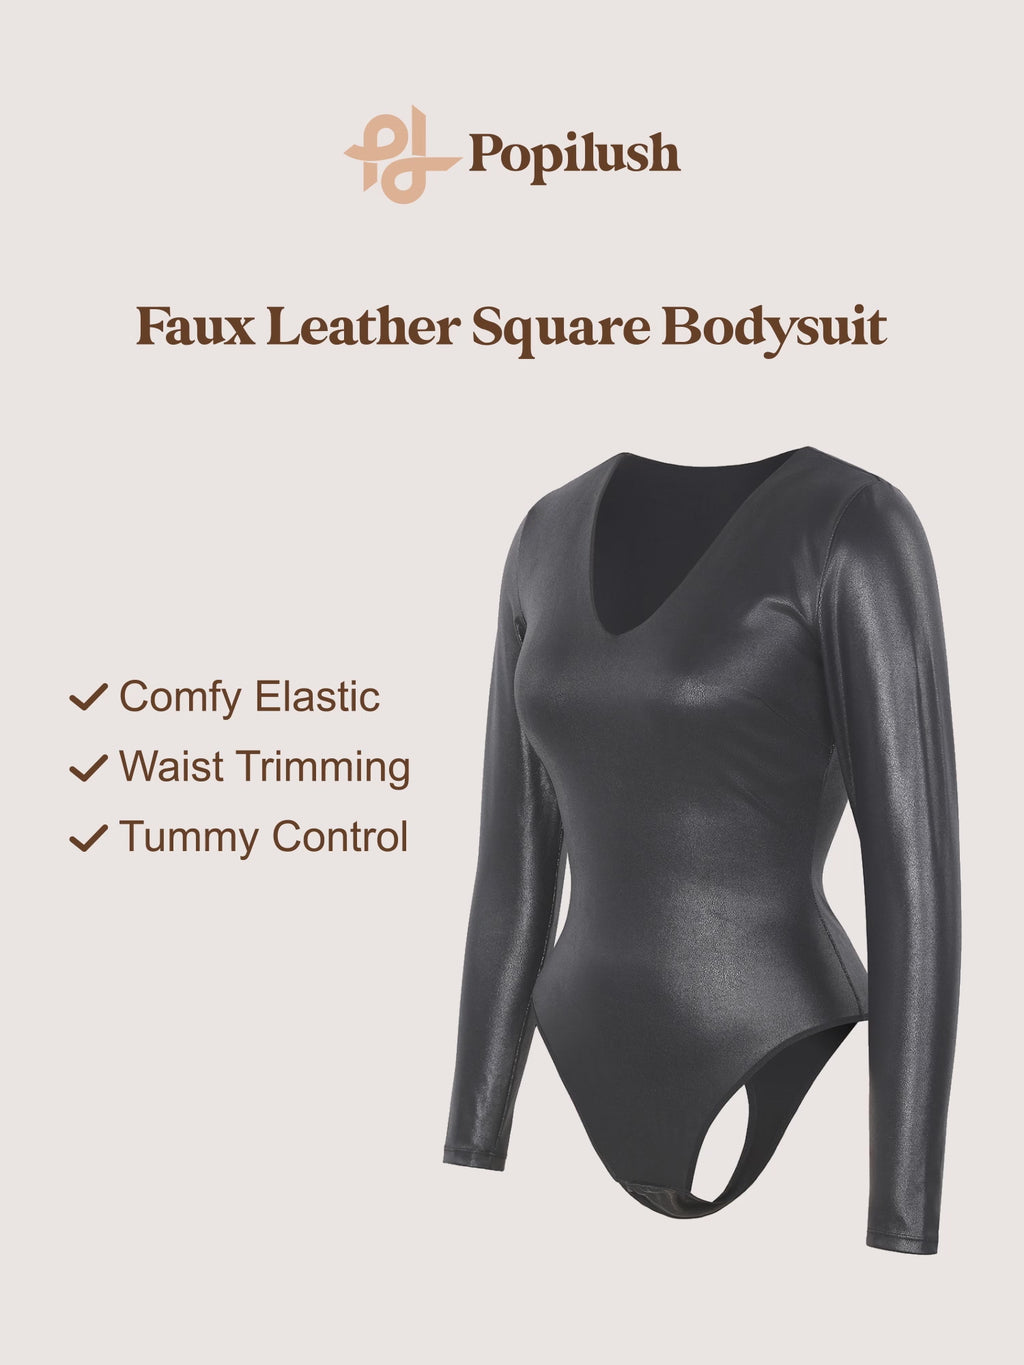 Sassy in leather 💋 #popilush #popilushofficial #bodysuit